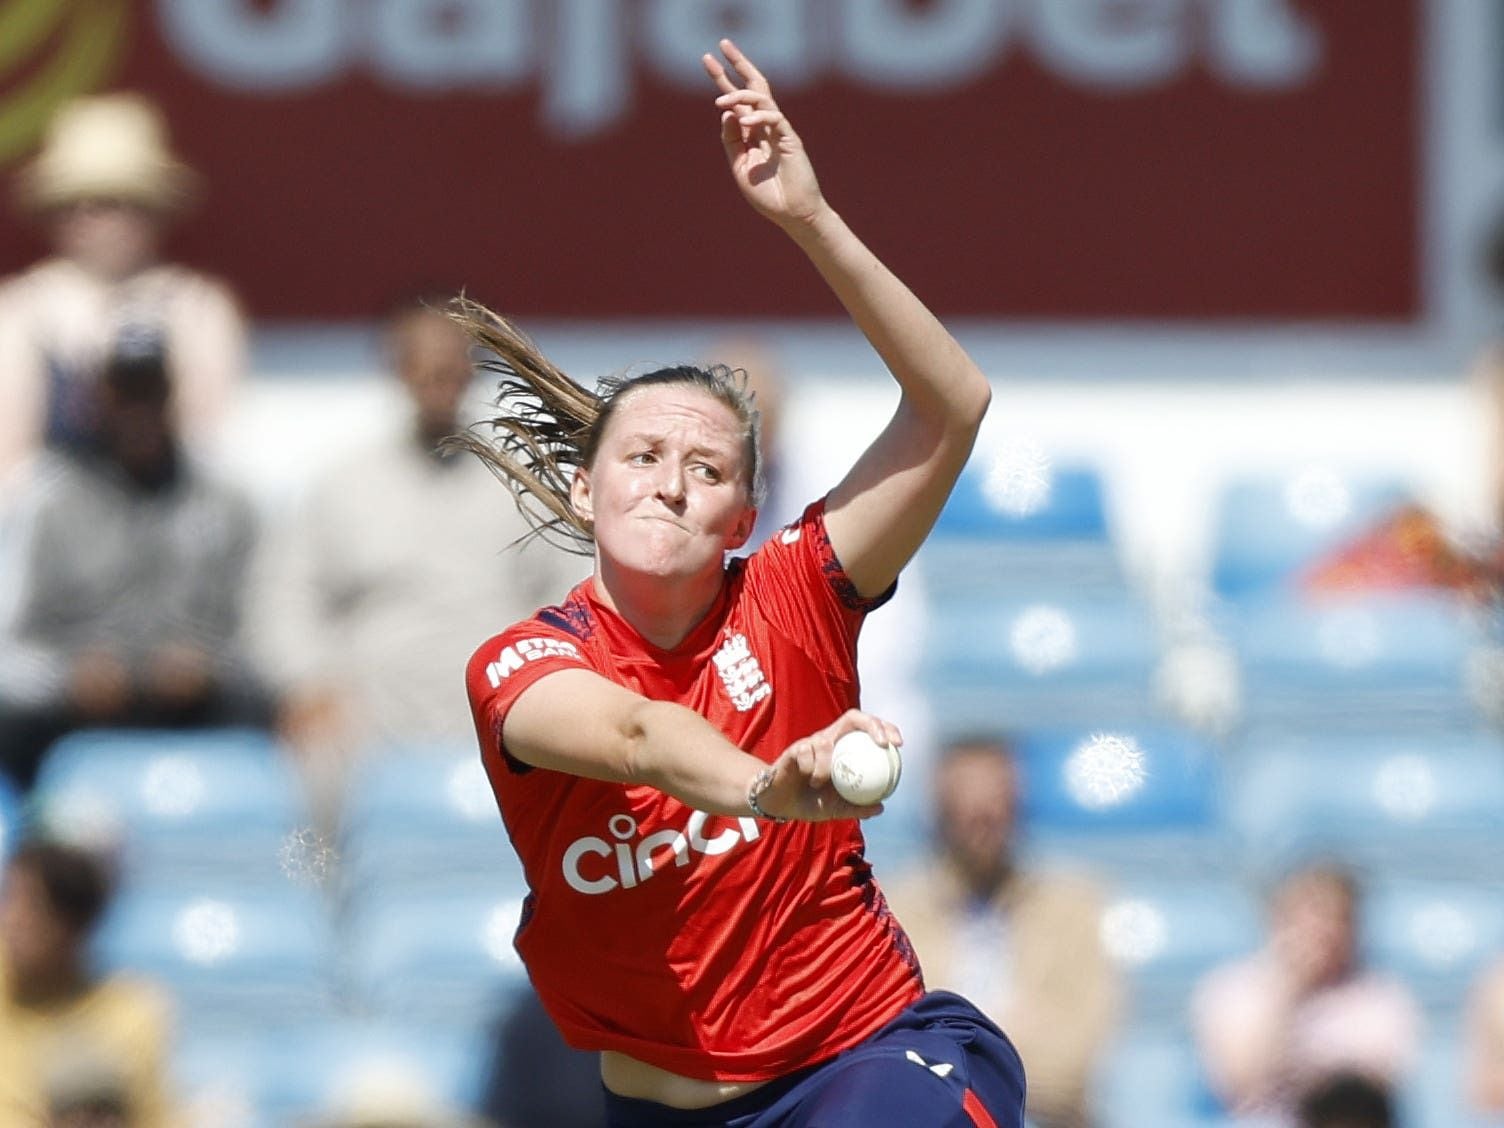 Lauren Filer not underestimating New Zealand as England seek ODI series win